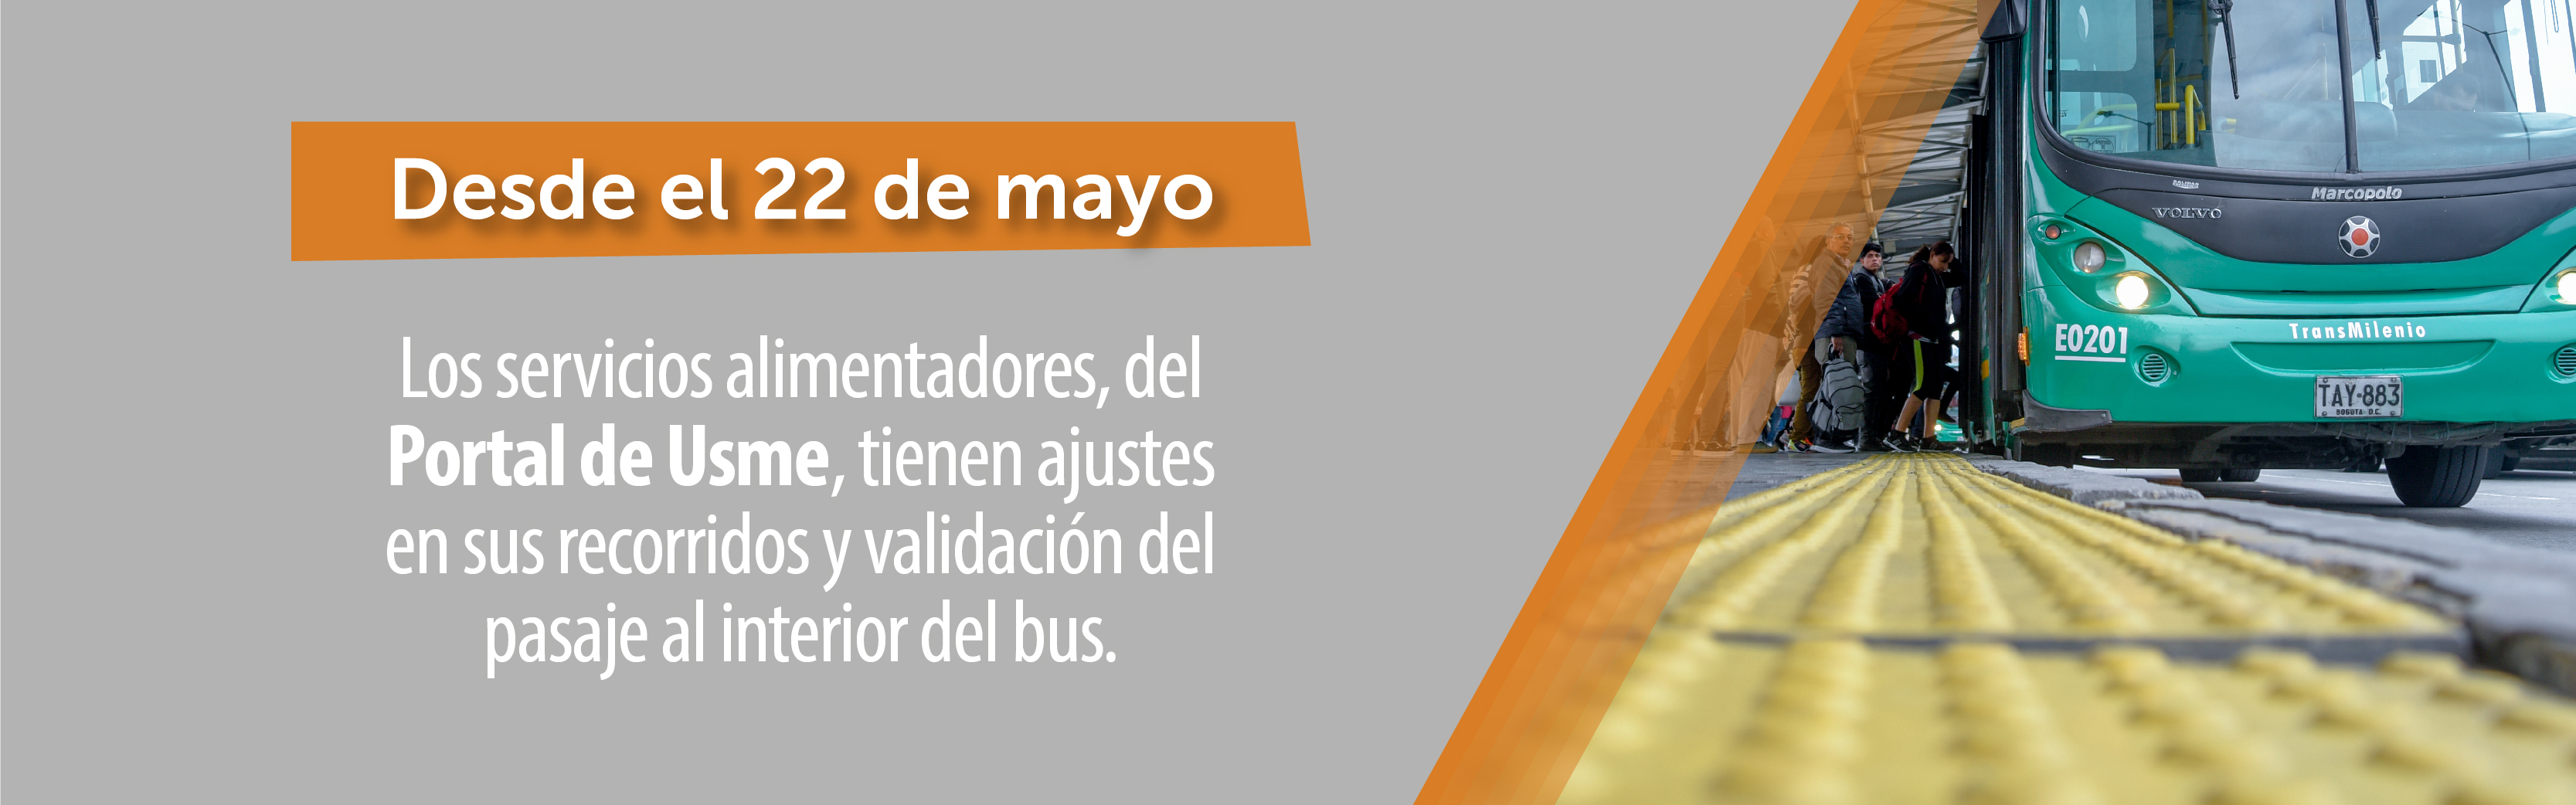 TransMilenio completa primer lote de 483 buses eléctricos para Bogotá